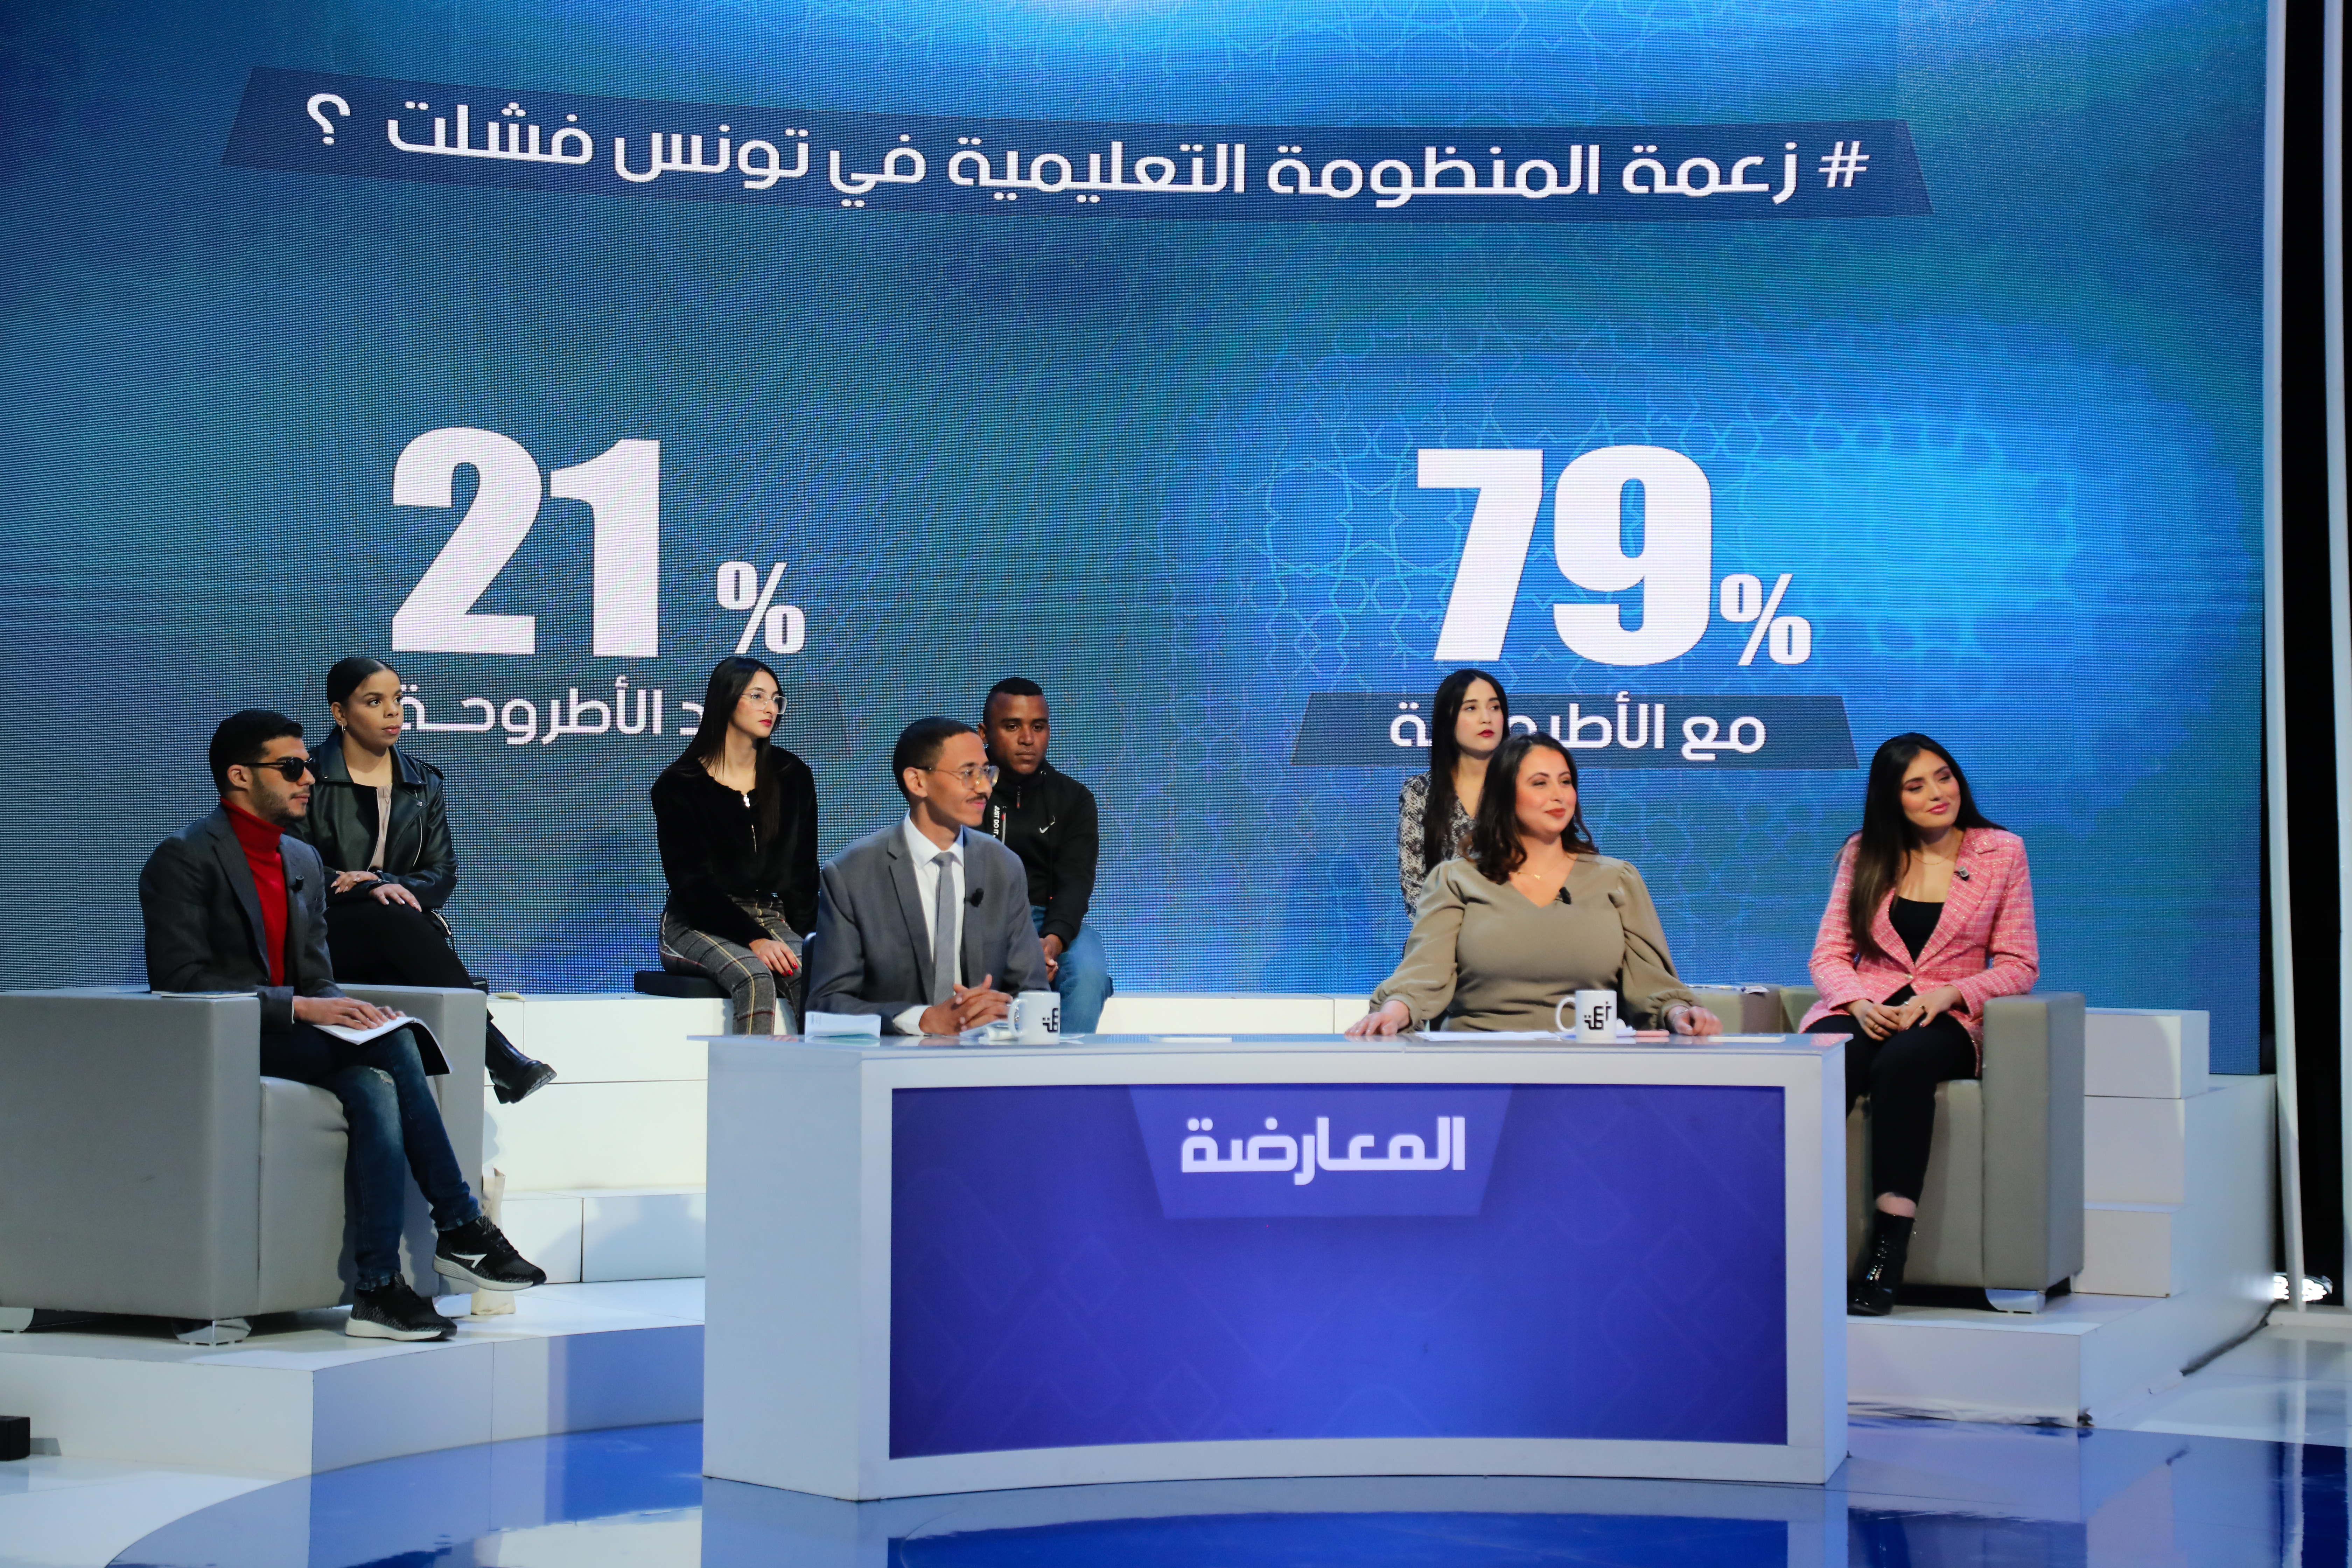 zaama social media Munathara debate youth Tunisia 2023 opinion makers